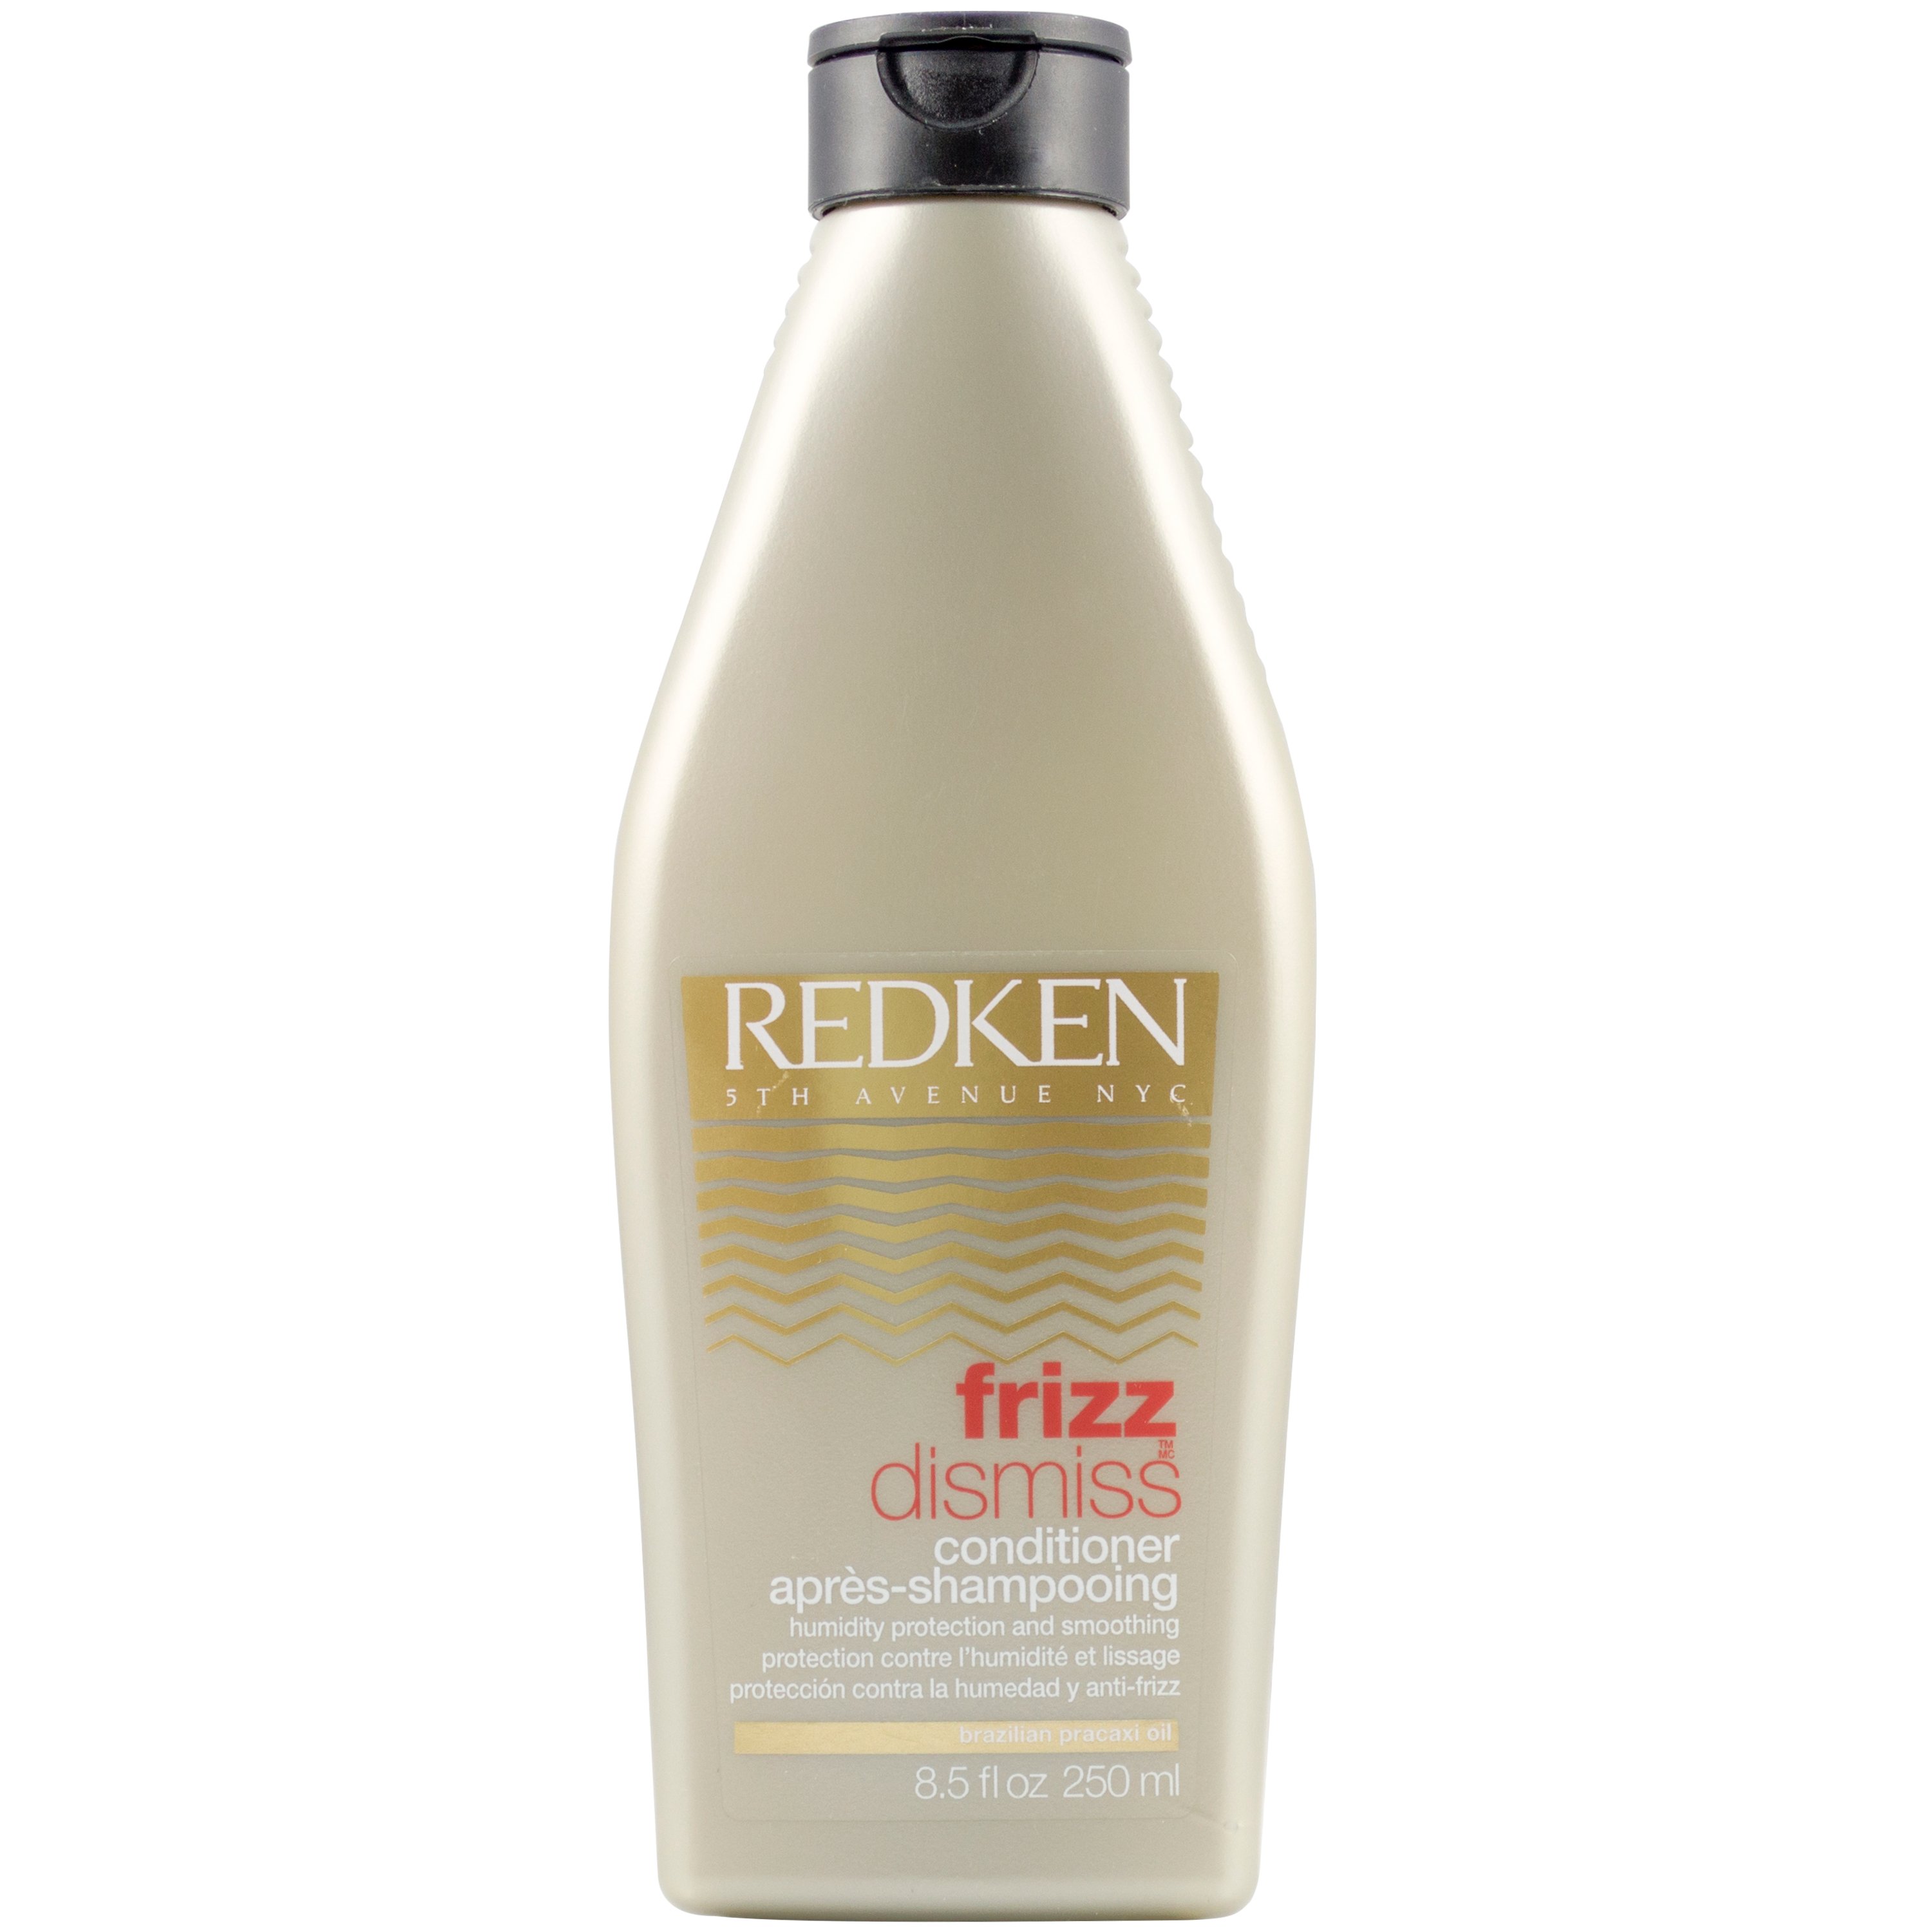 Redken Frizz Dismiss Conditioner - Shop Shampoo & Conditioner at